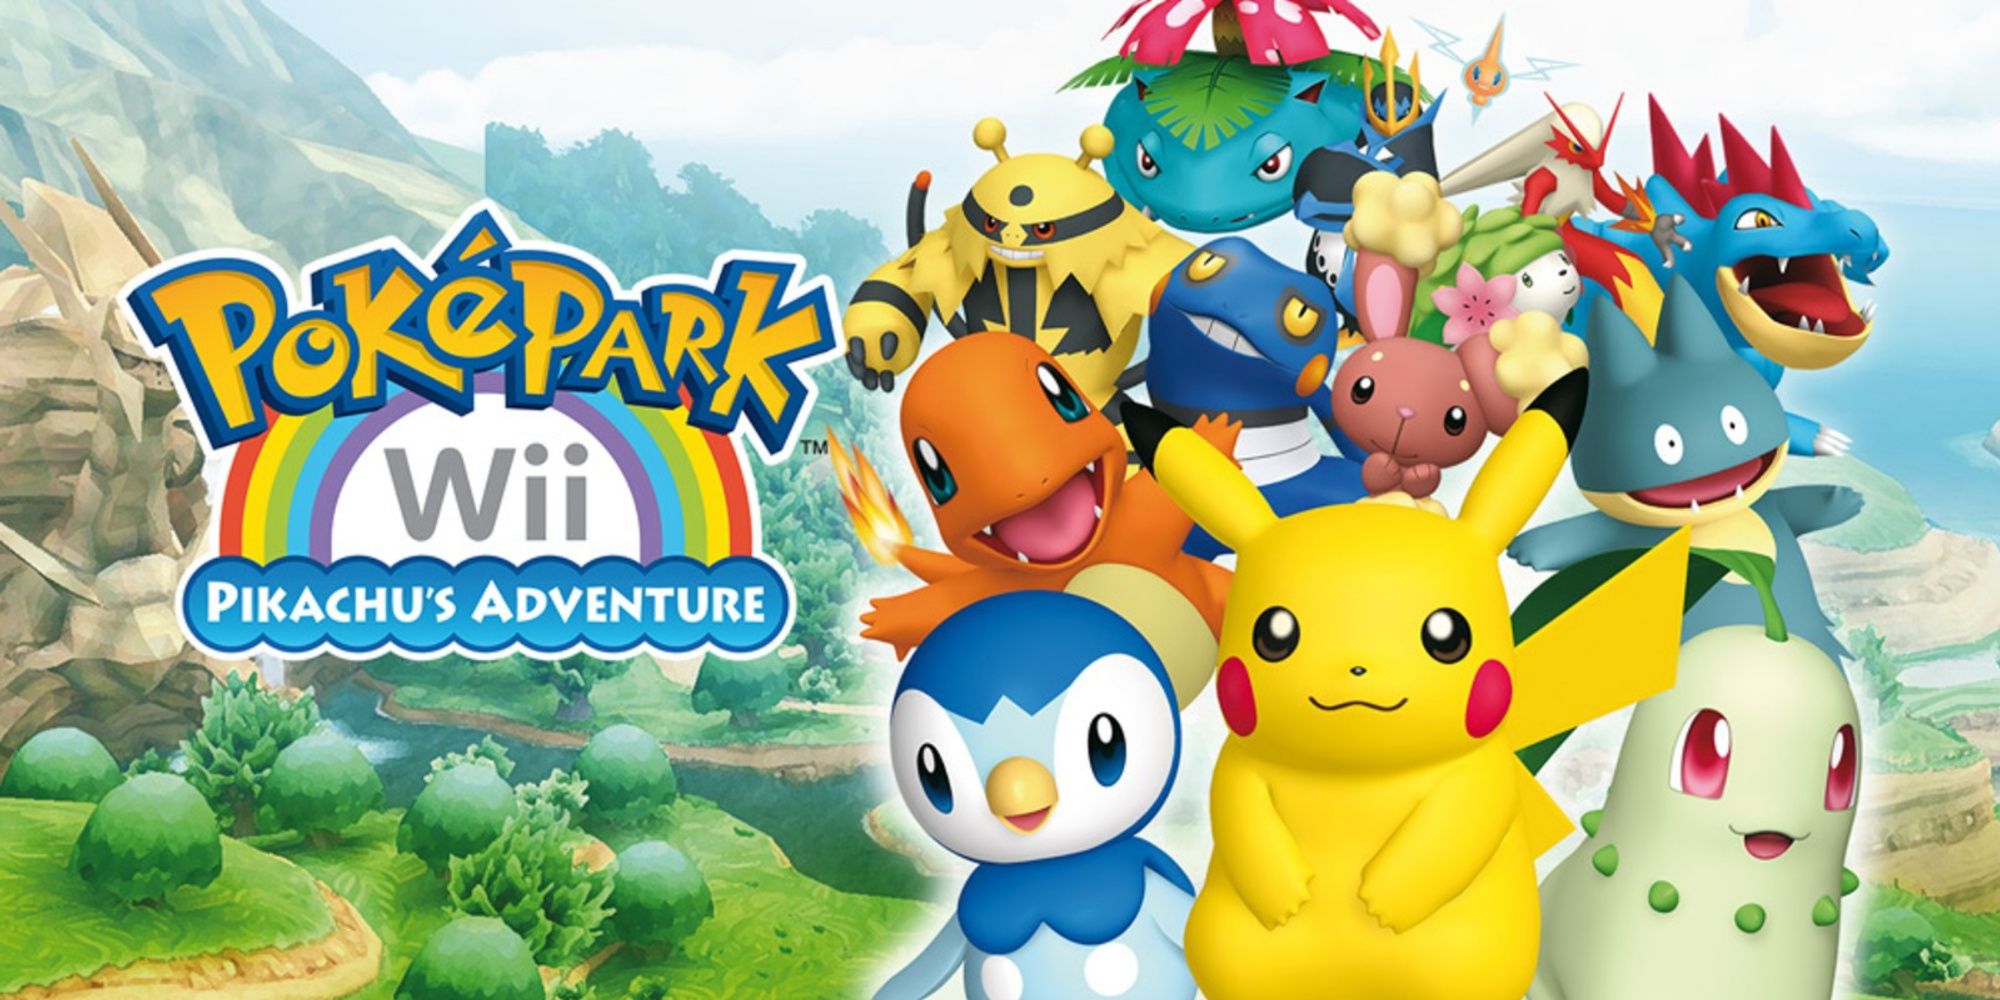 Promo art featuring Pokemon in PokePark Wii Pikachu's Adventure